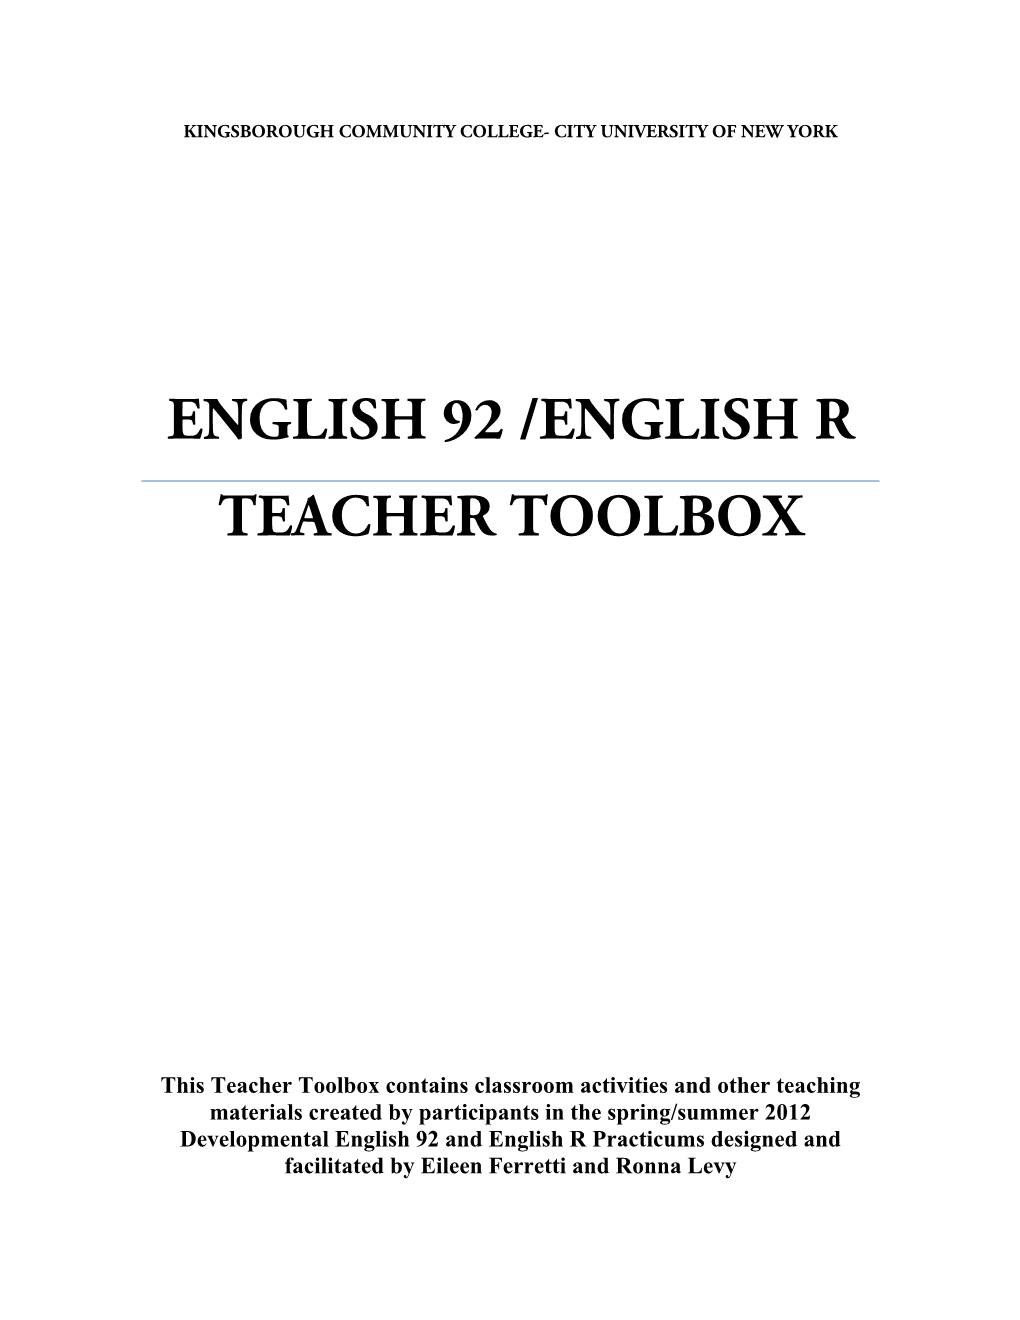 English 92 /English R Teacher Toolbox